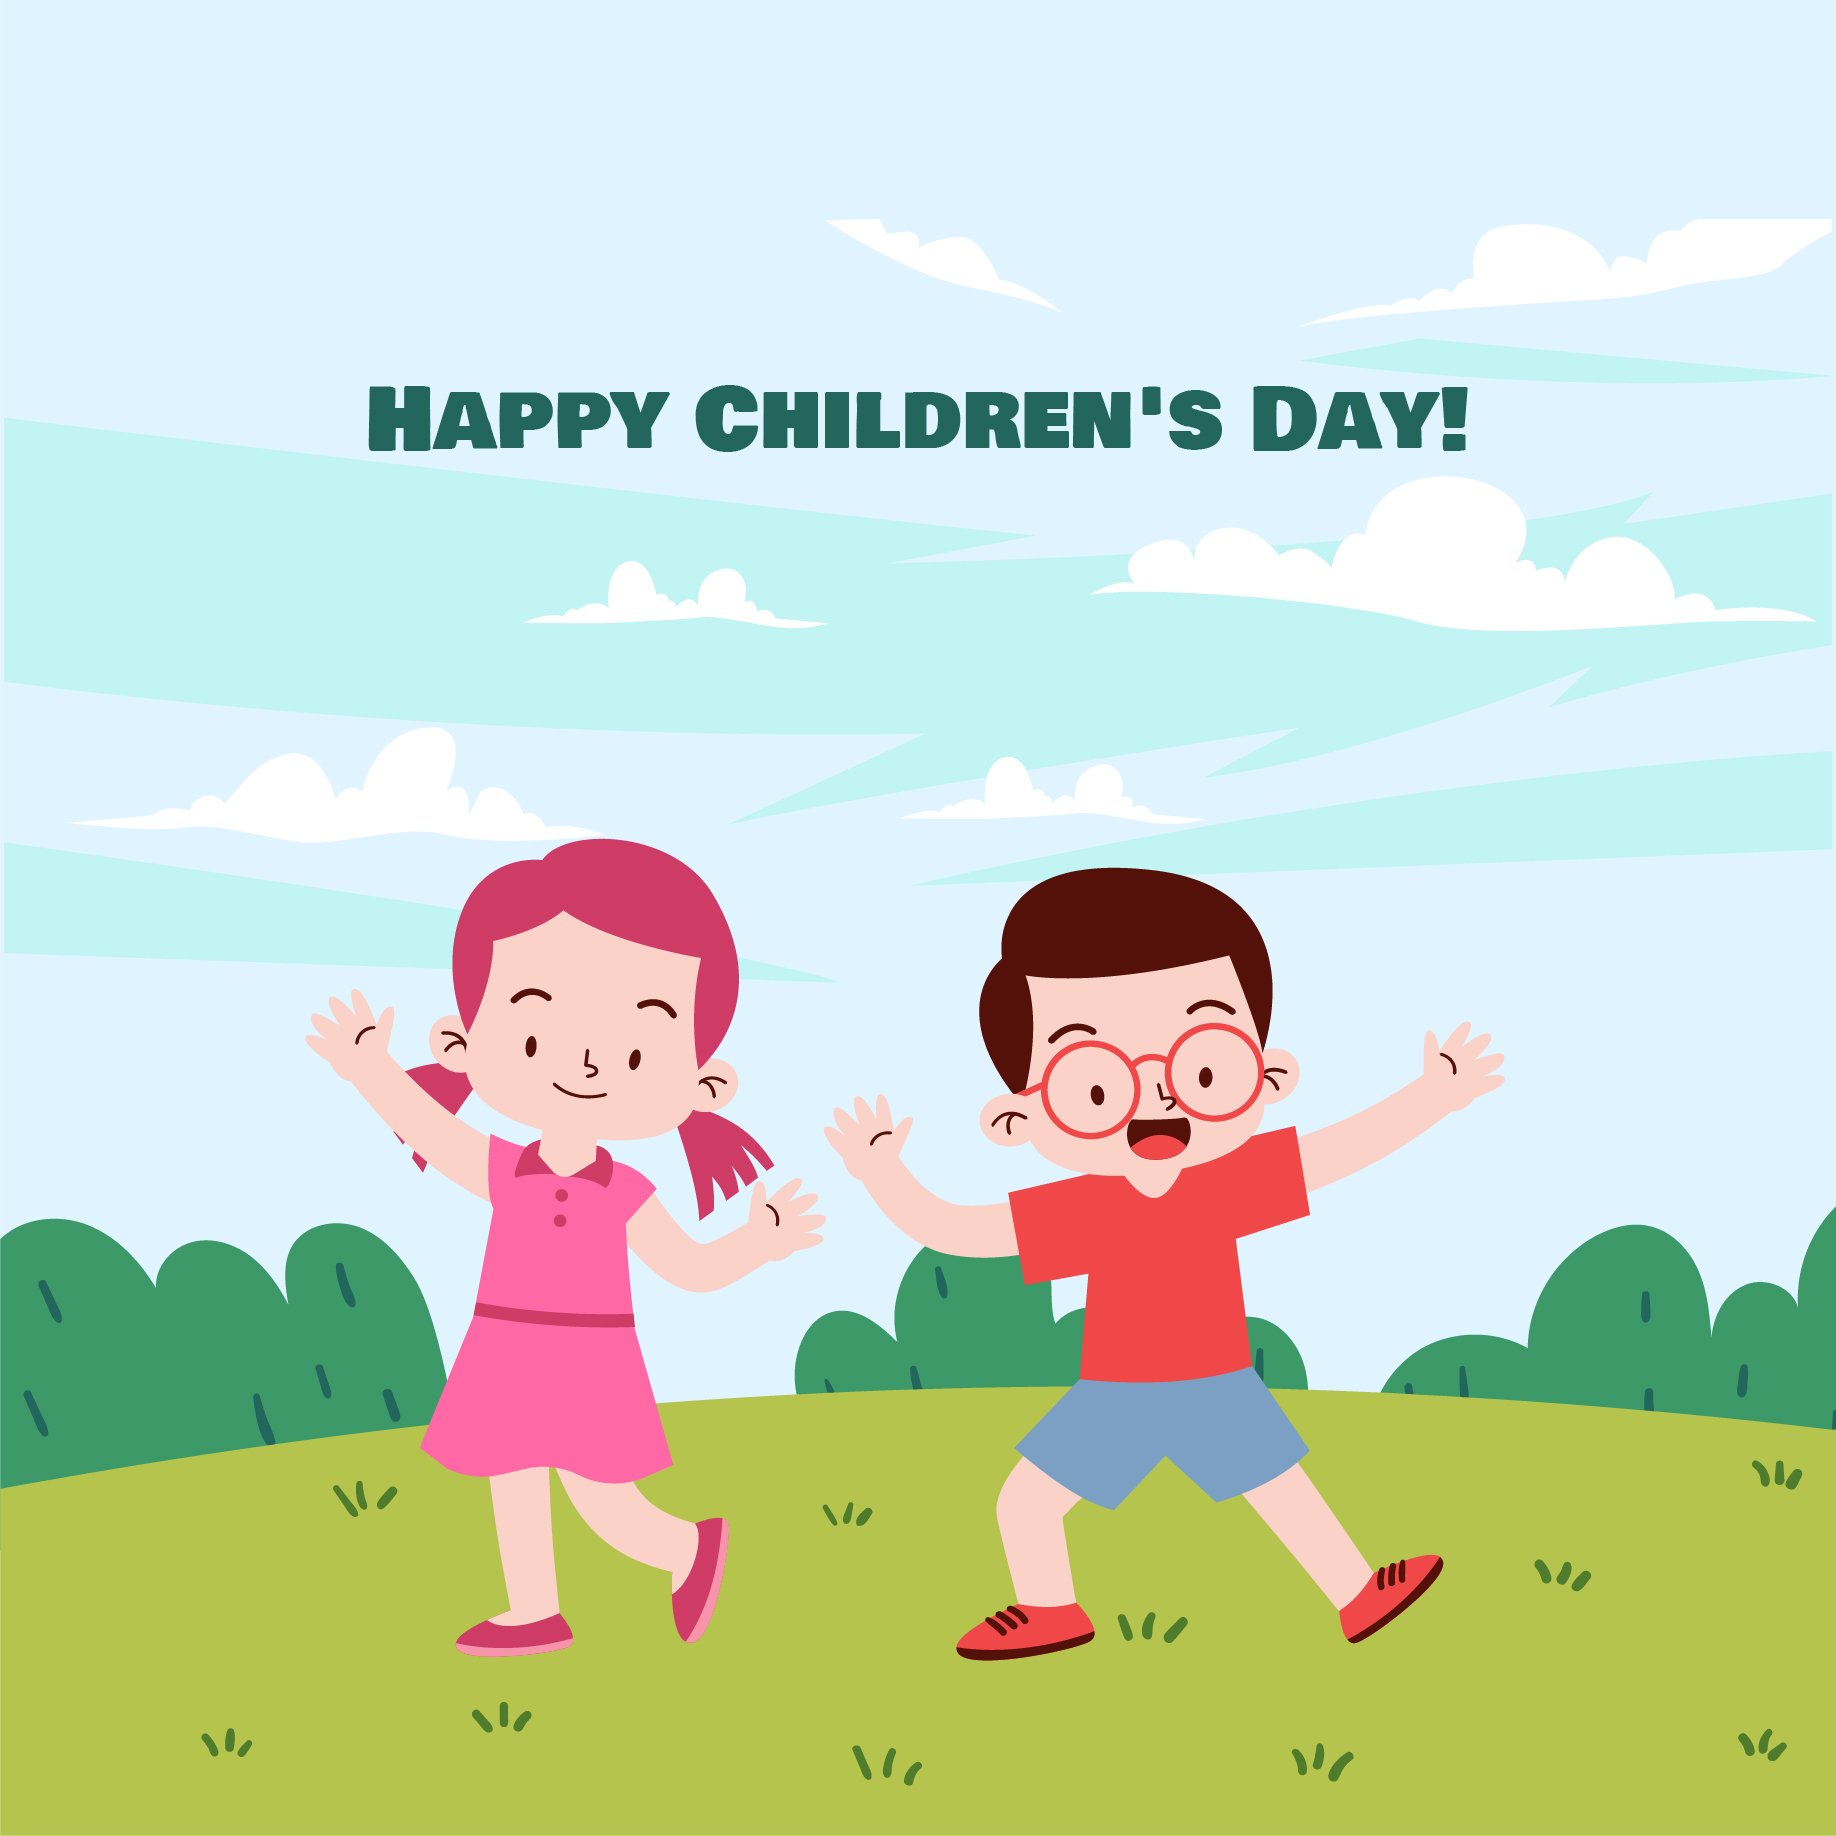 Happy Children's Day Illustration in Illustrator, PSD, EPS, SVG, JPG, PNG